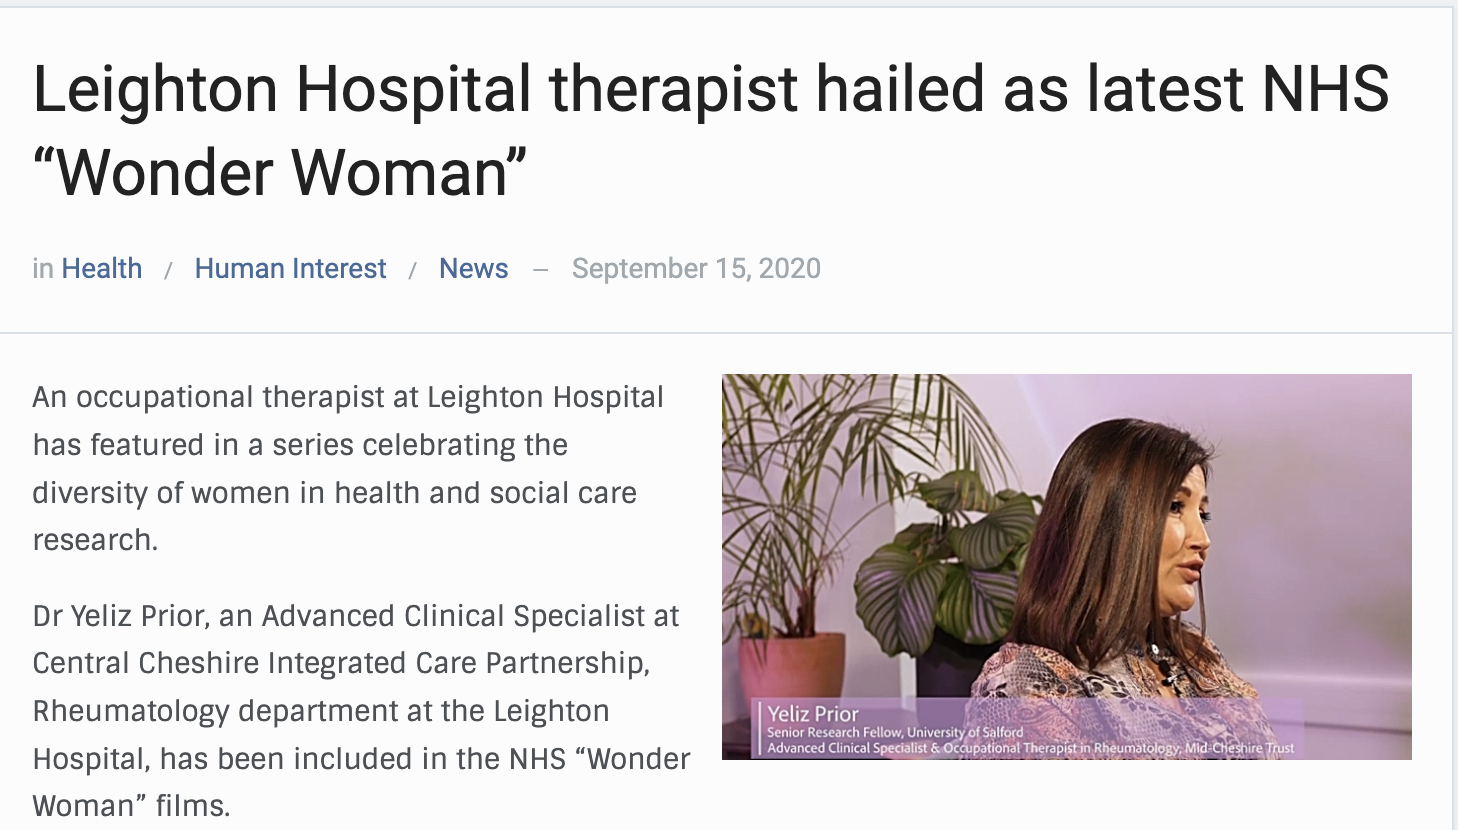 Leighton Hospital therapist hailed as latest NHS “Wonder Woman”